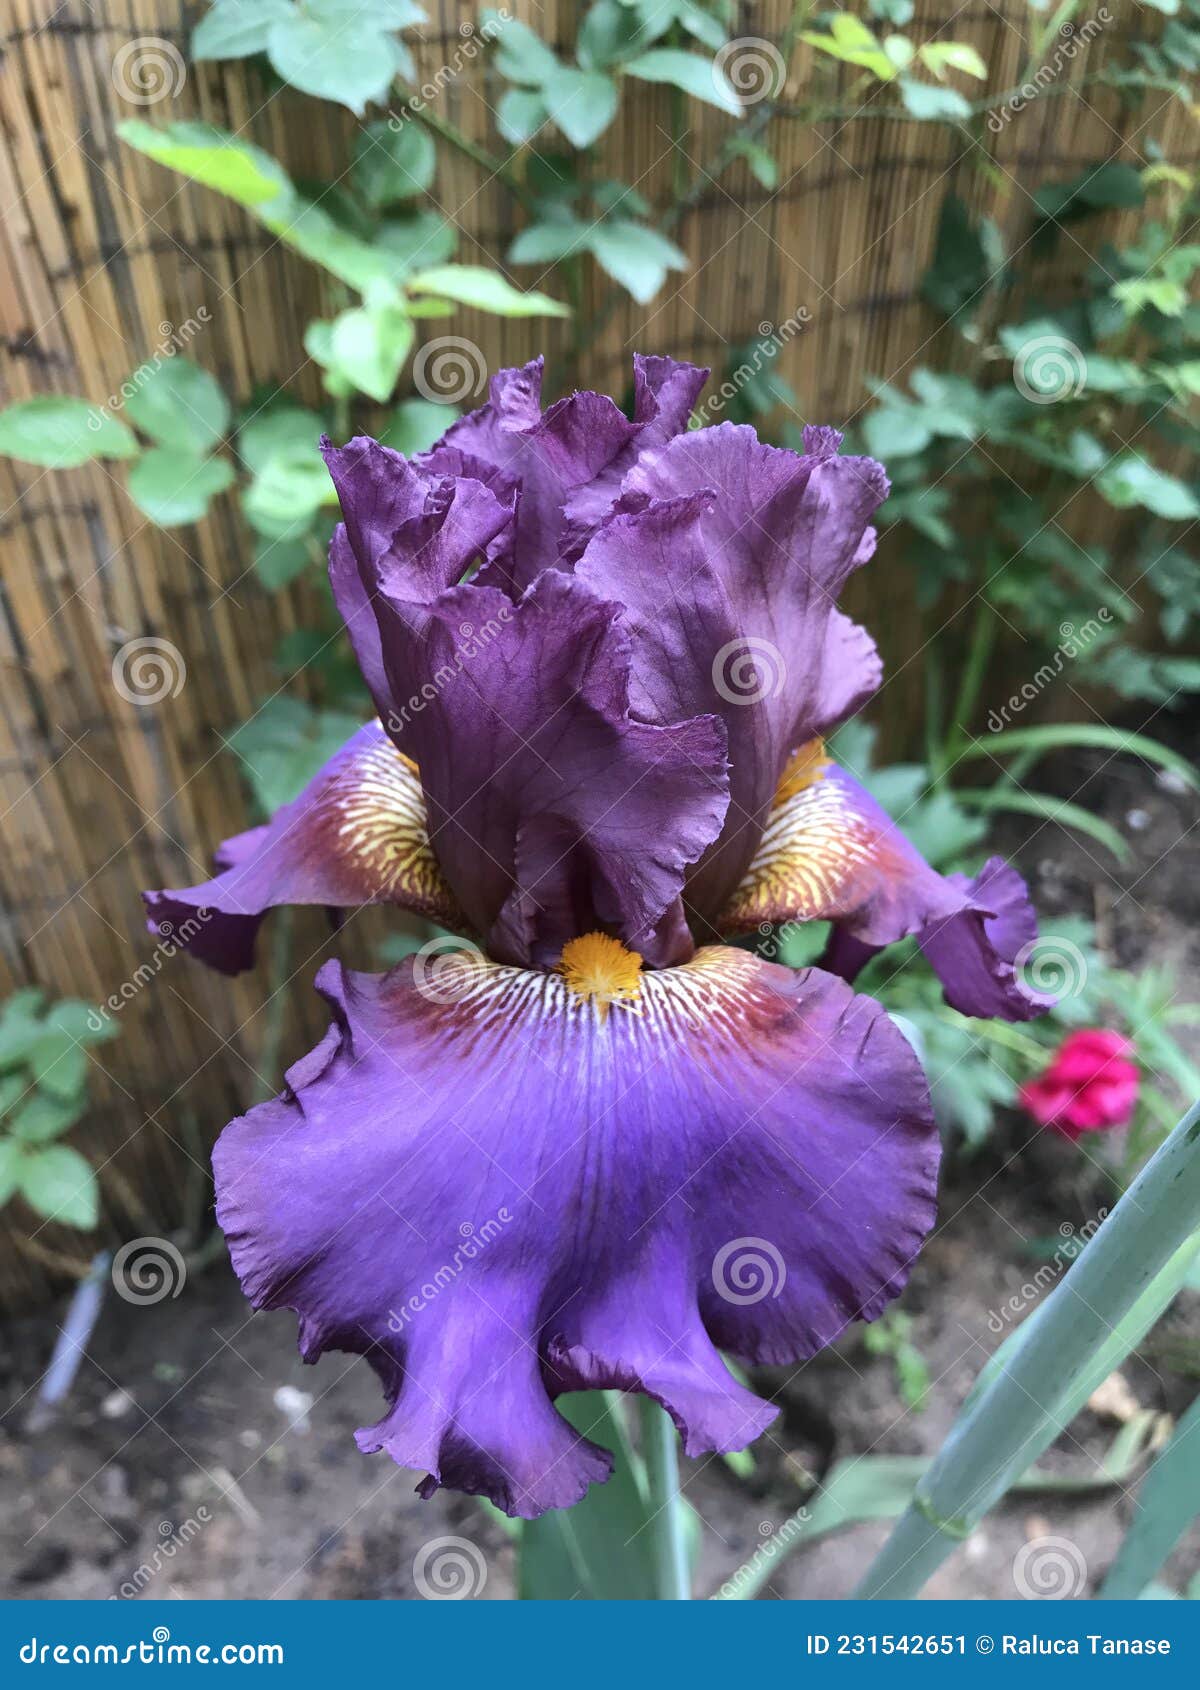 iris germanica, cantina variety